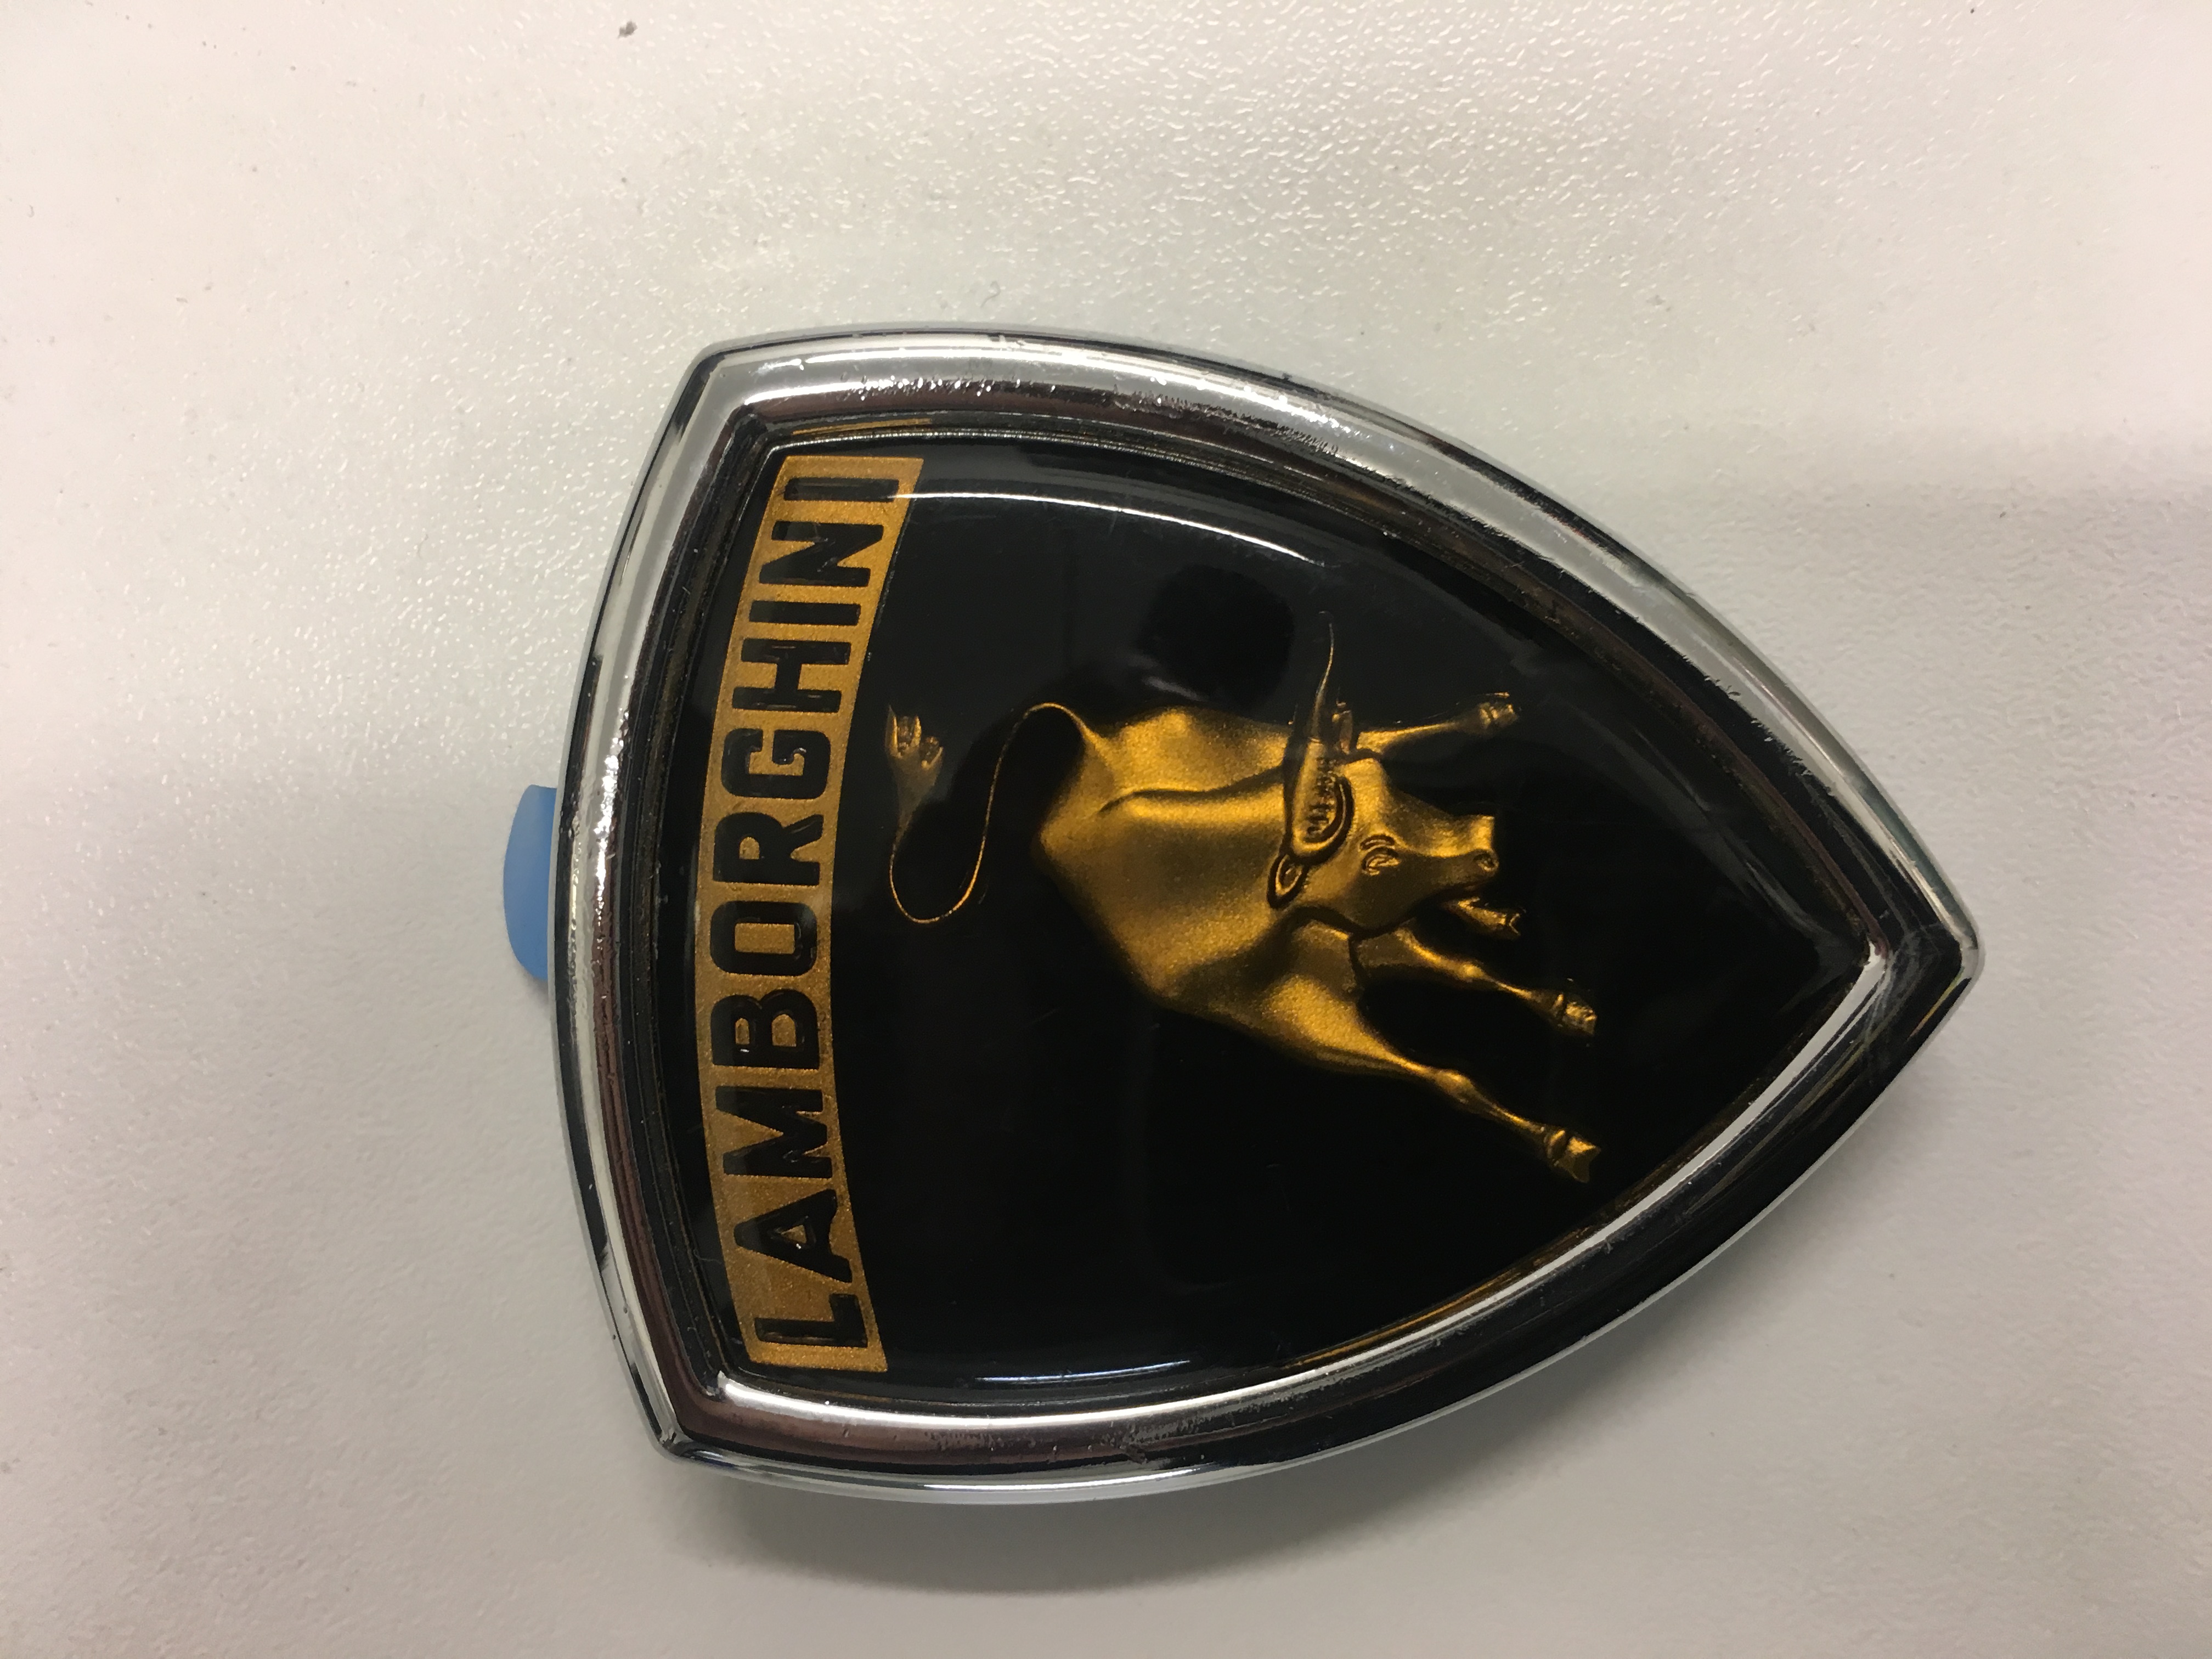 Lamborghini Badge